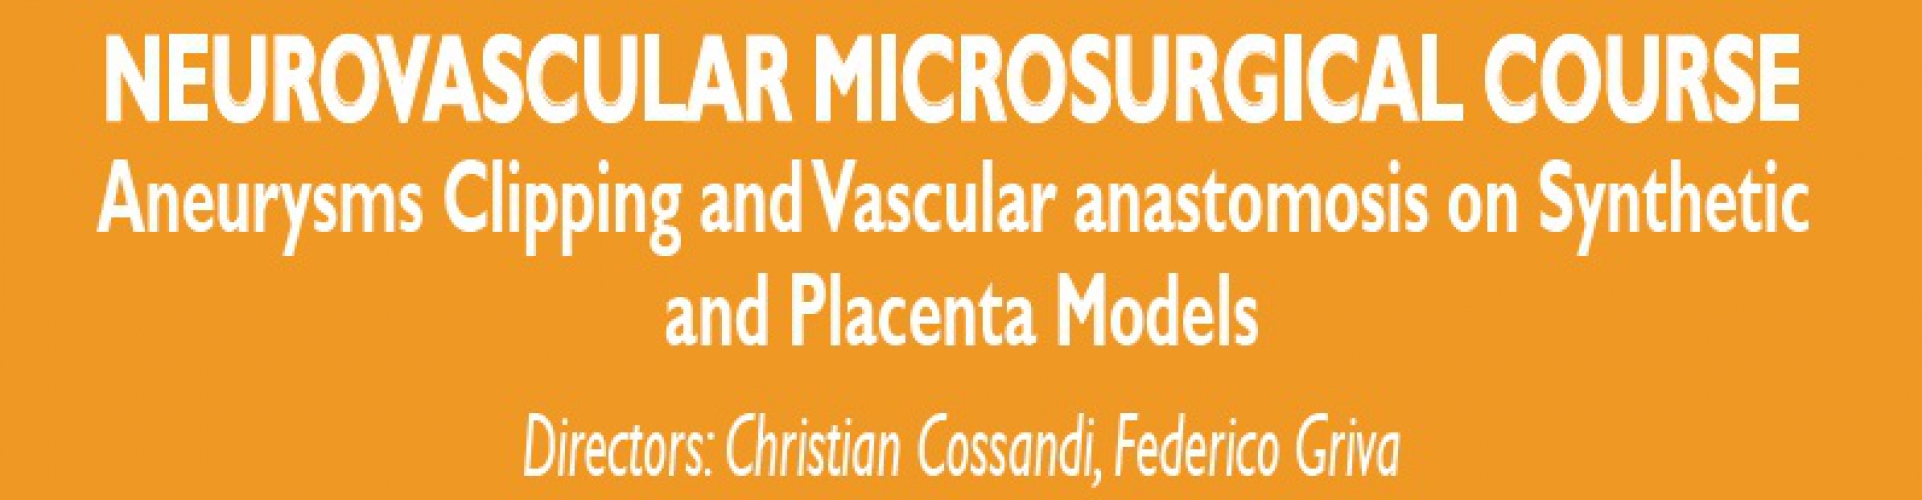 Neurovascular microsurgical course